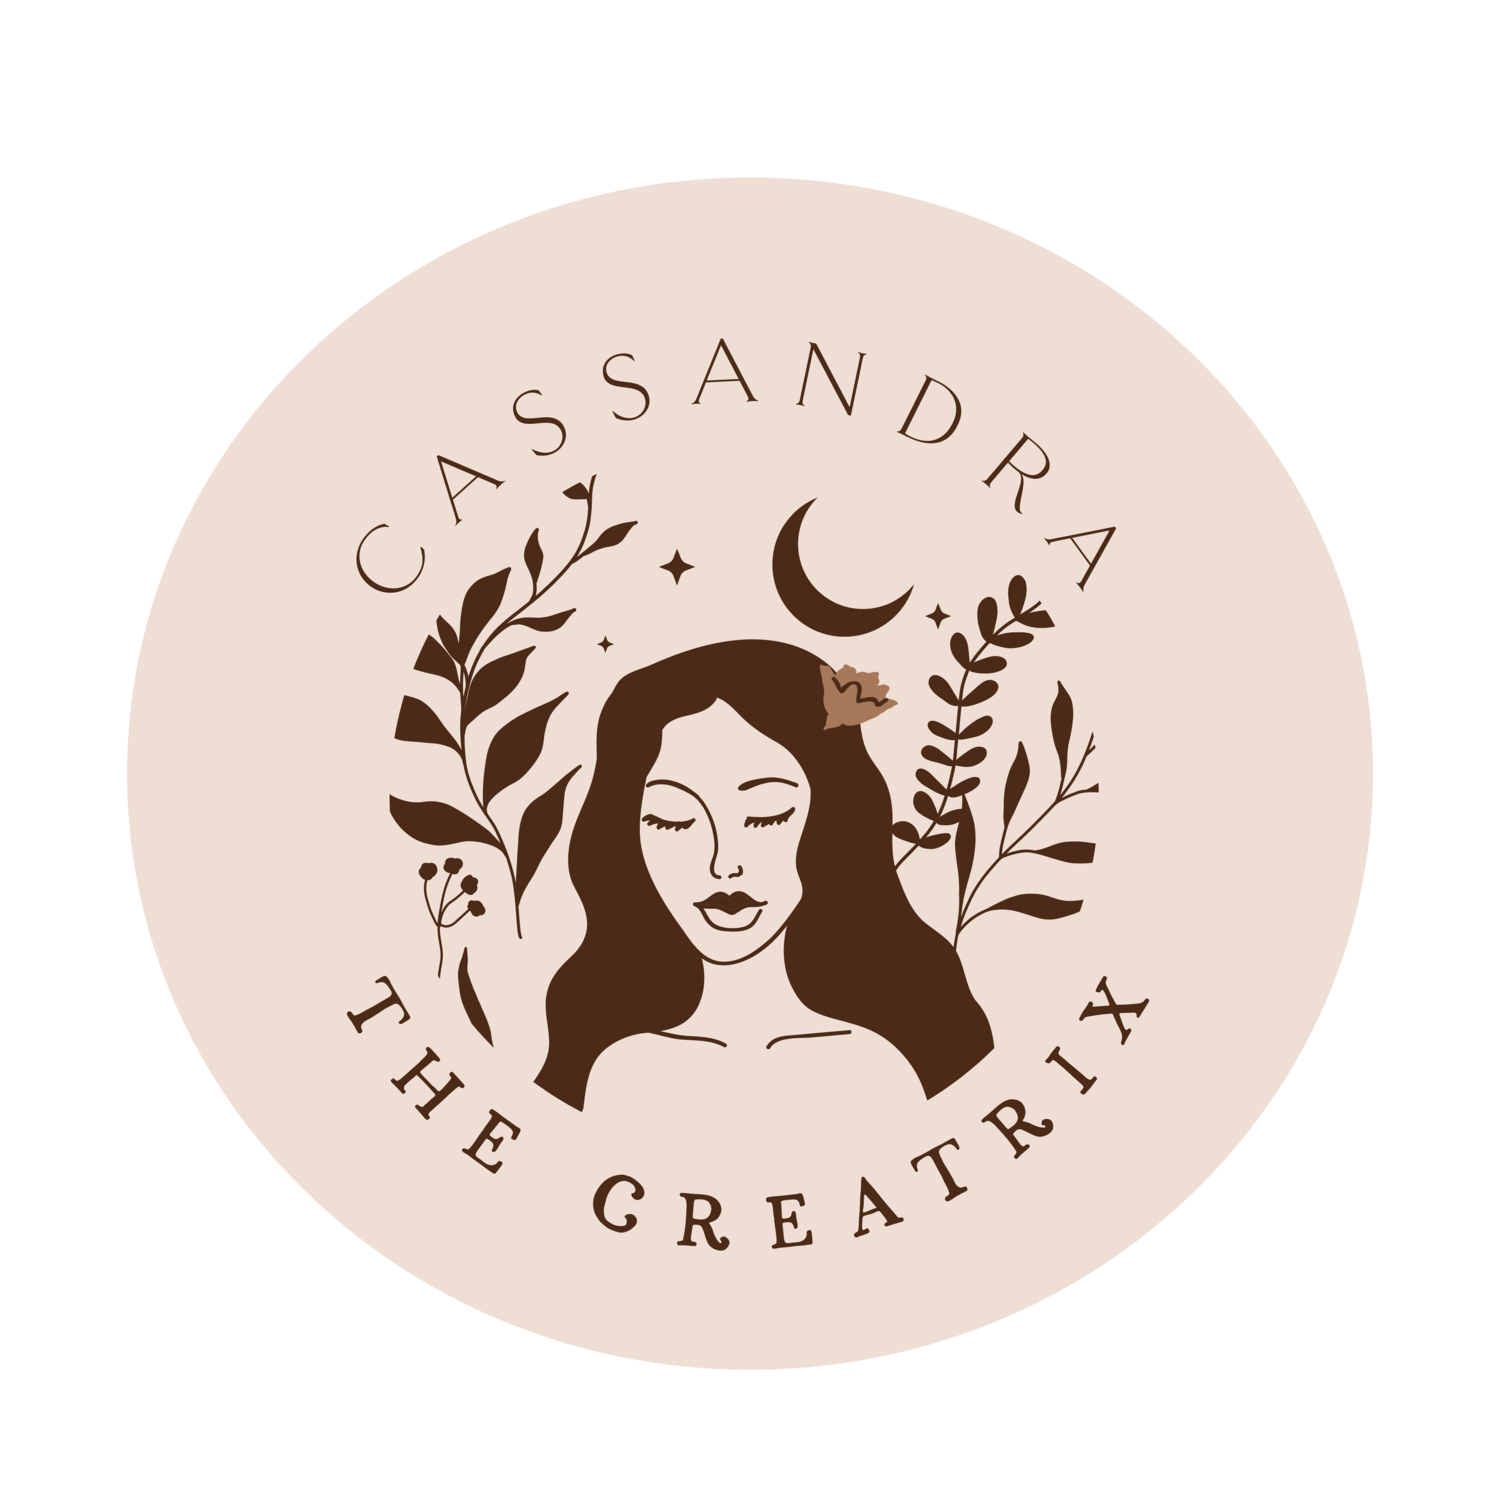 Cassandra the Creatrix